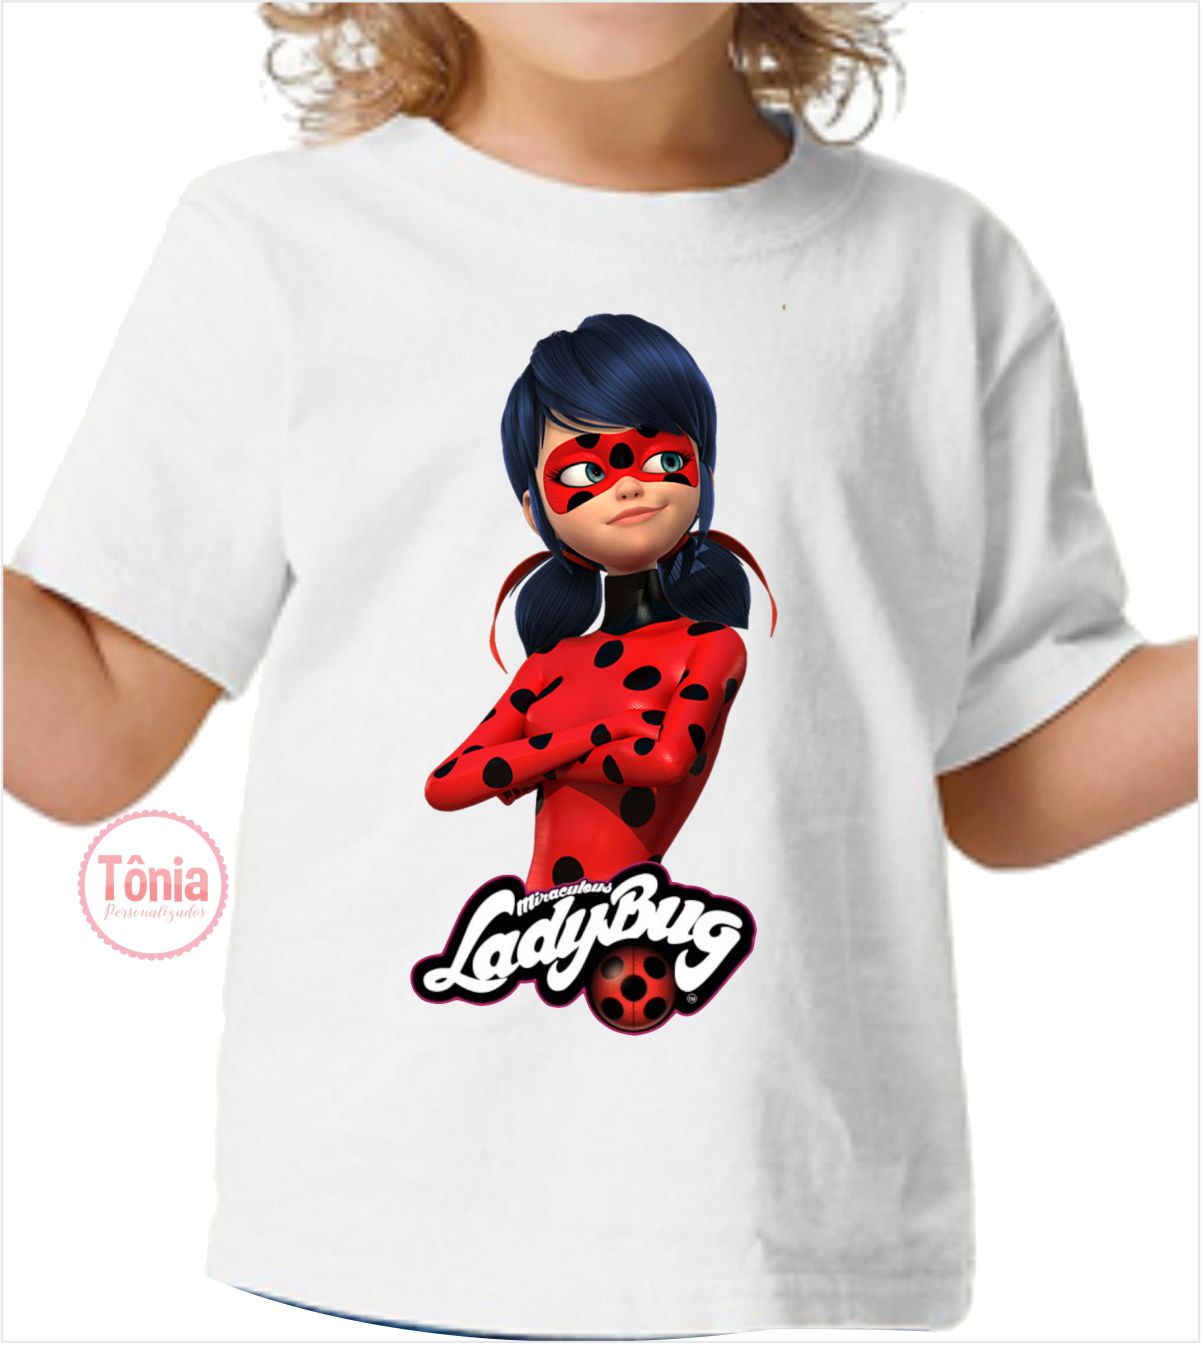 Ladybug miraculous camiseta branca - Tônia Personalizados